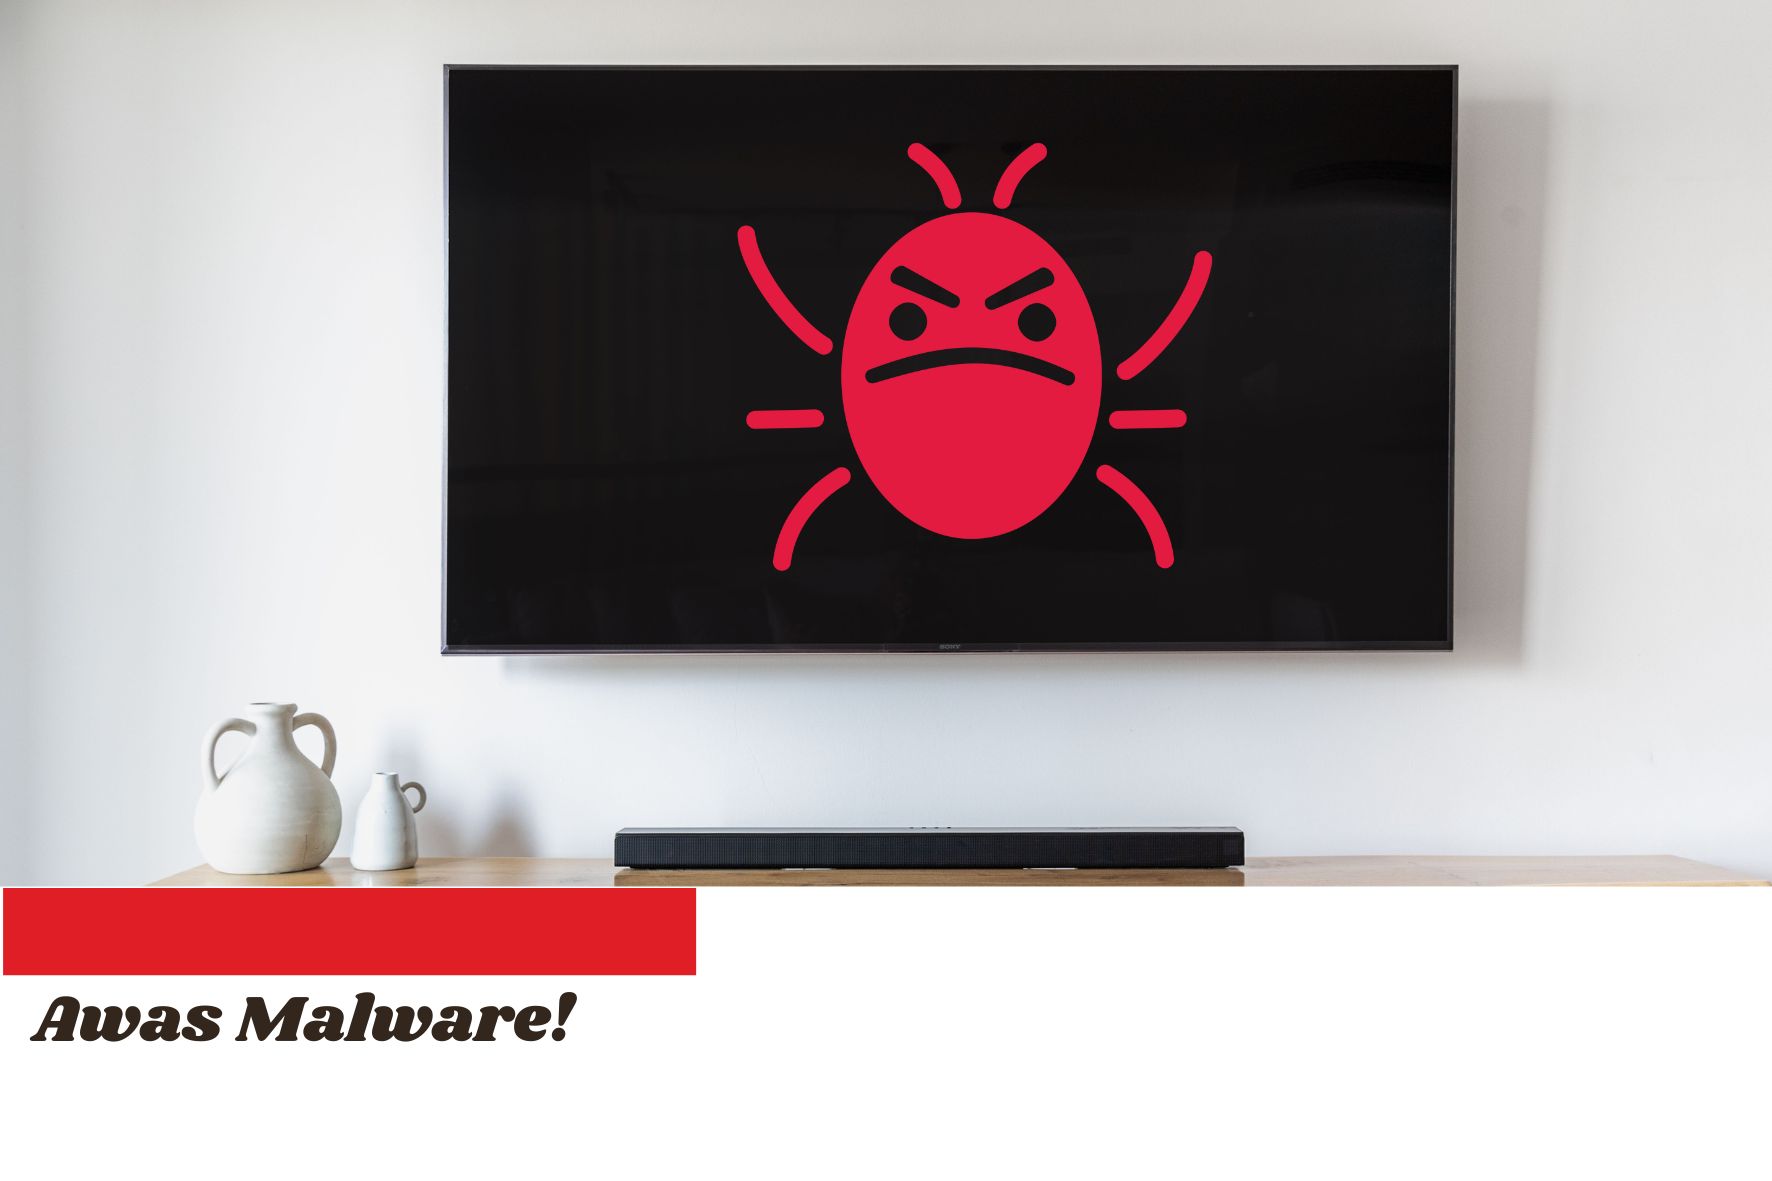 Rawan Terkena Virus, Begini Cara Mengamankan Android TV dari Malware Berbahaya